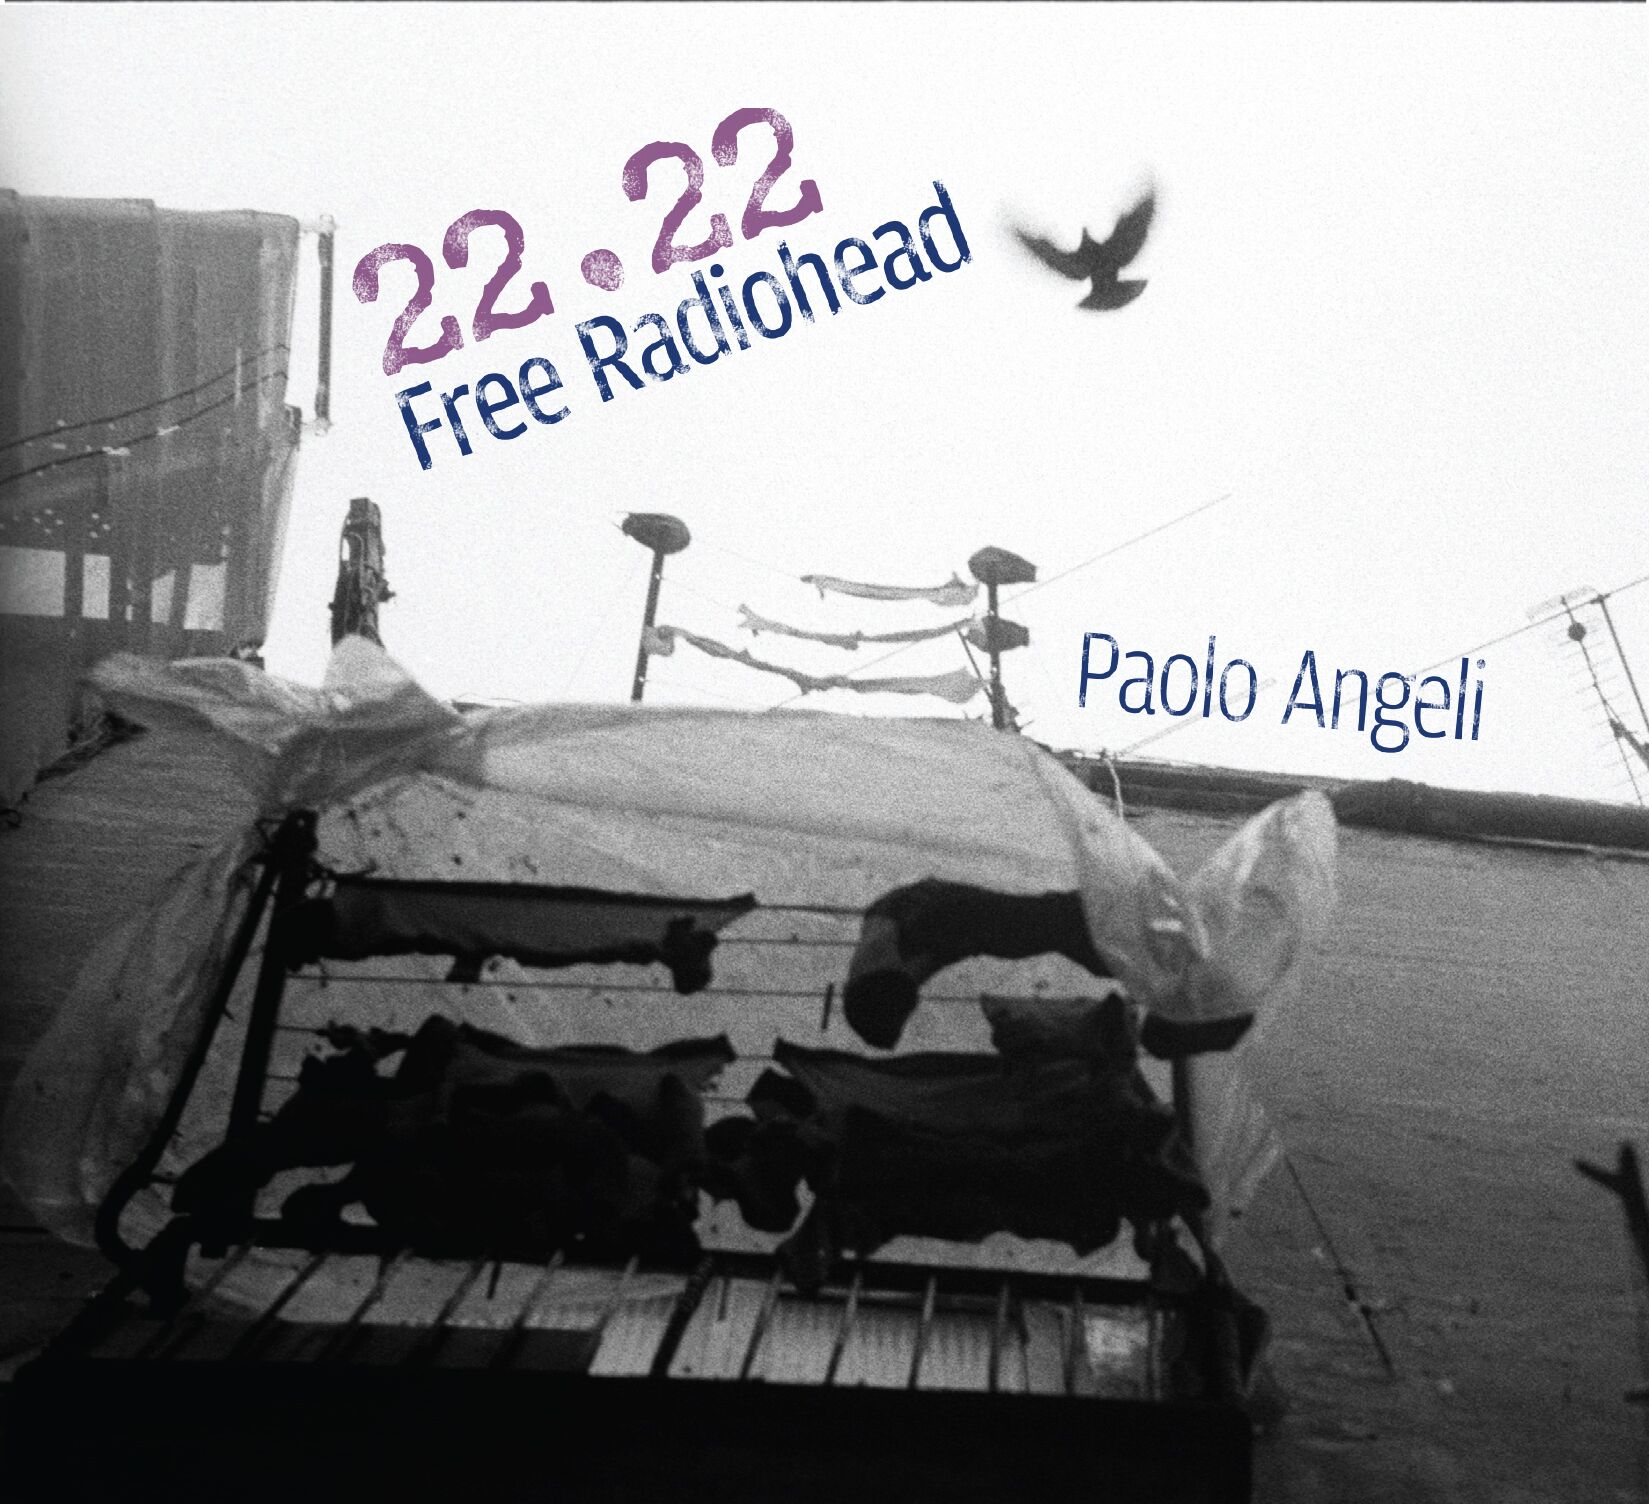  22.22 Free Radiohead